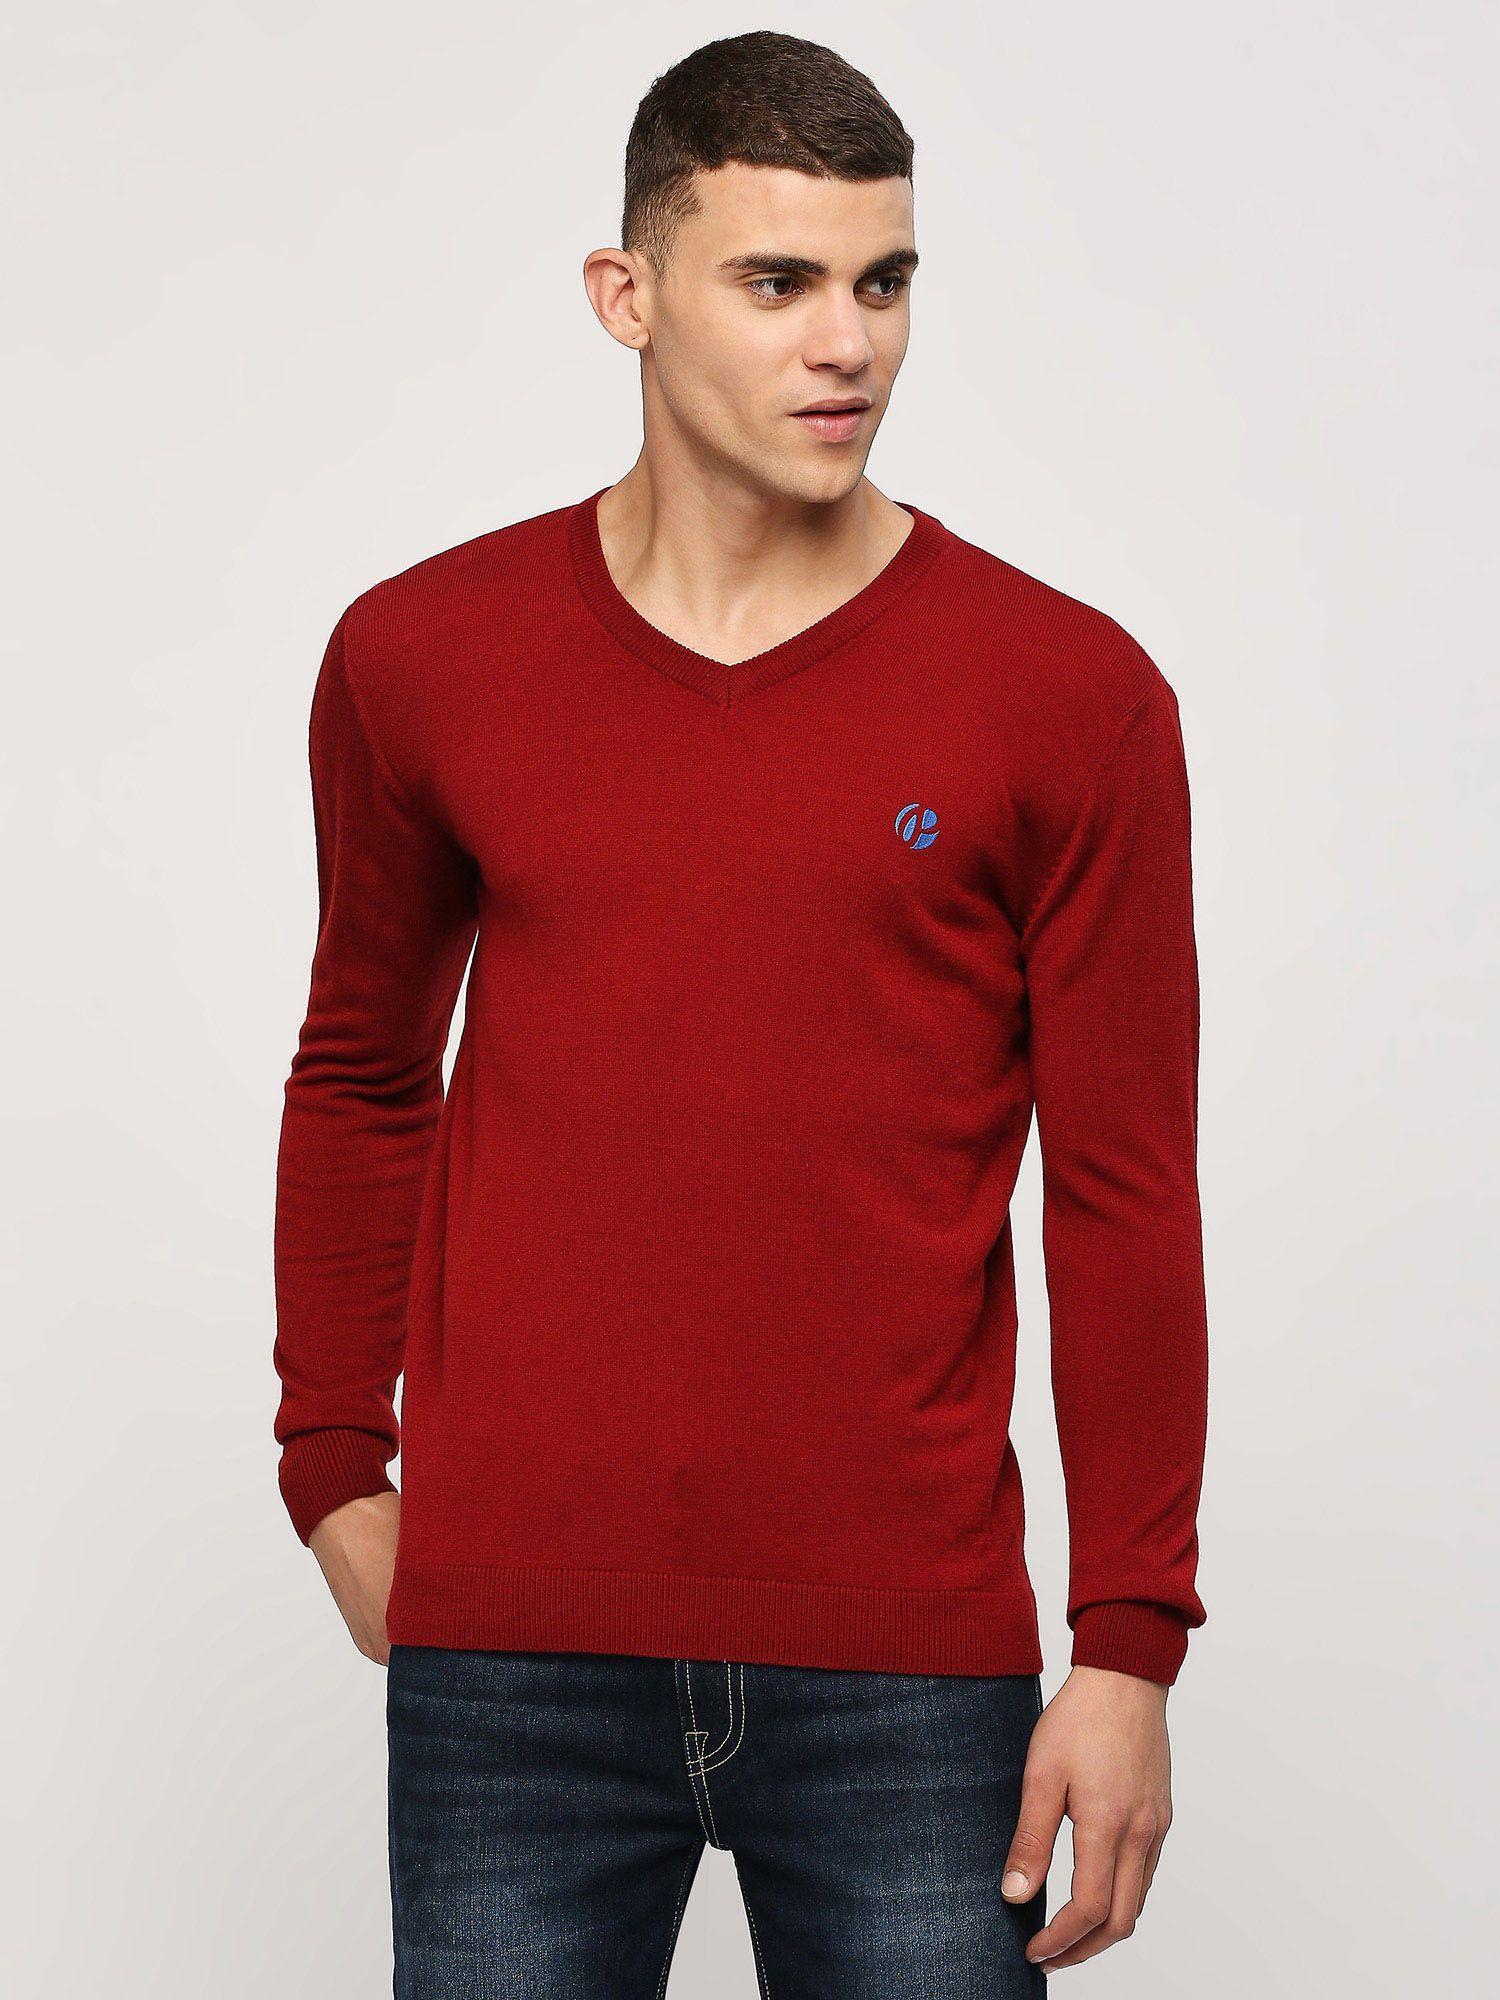 red lightweight long sleeve sweater